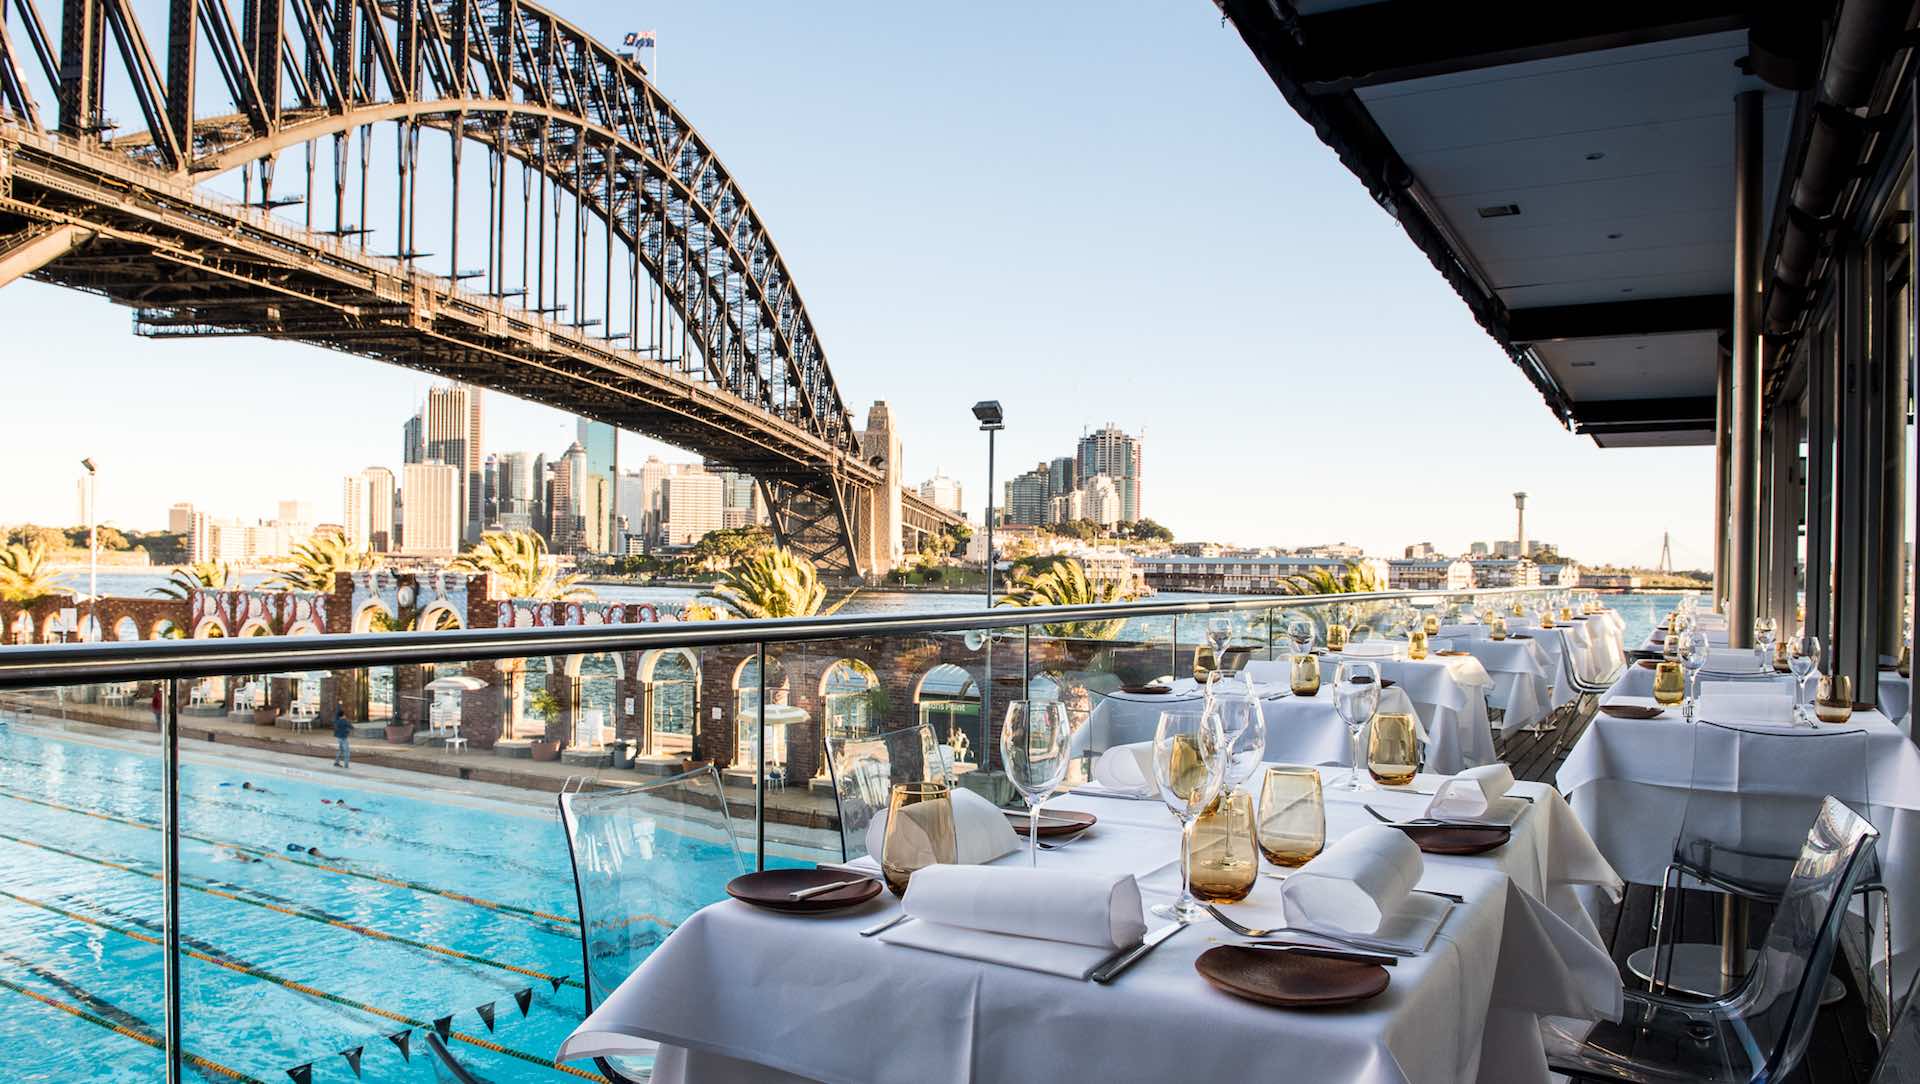 Dining Restos To Try In Sydney